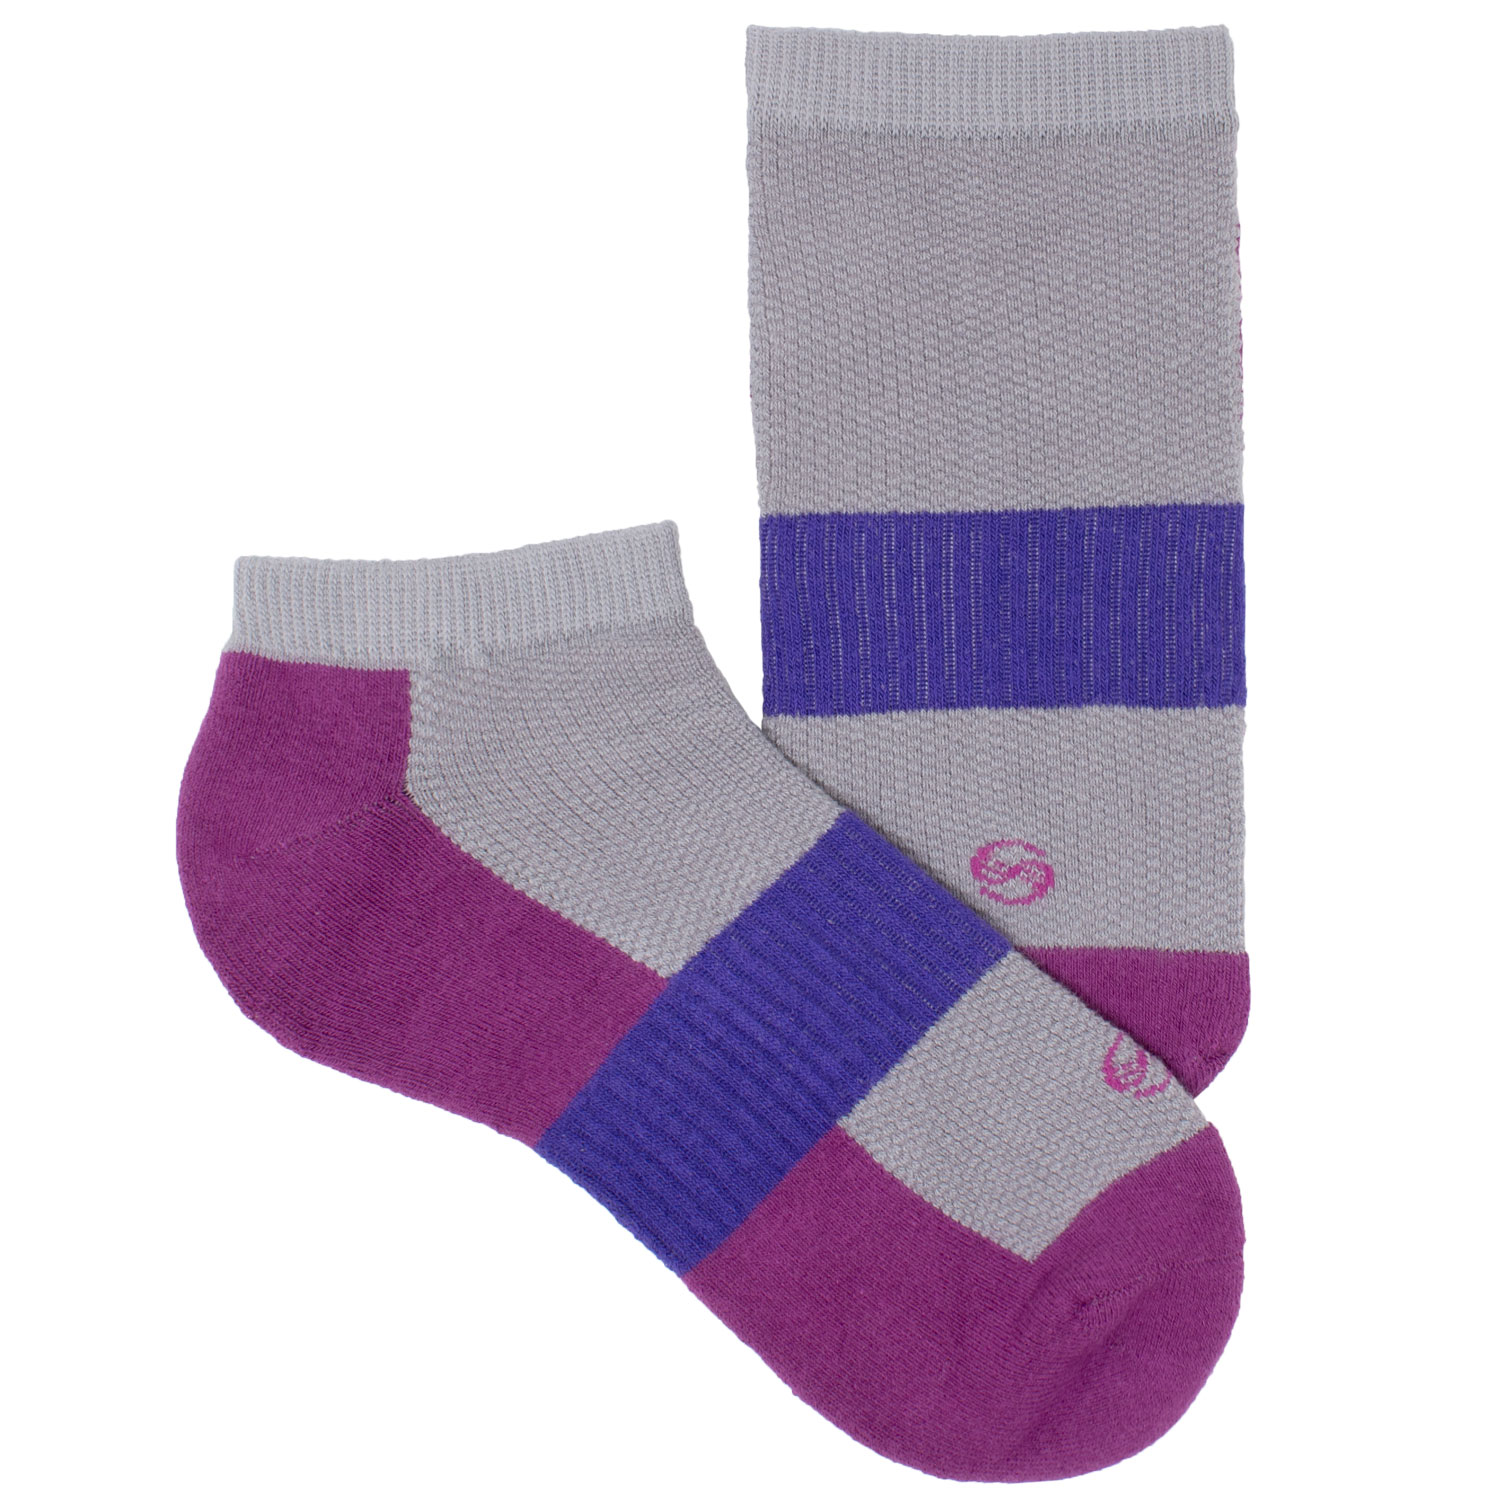 SOBEYO Women's Socks No Show Performance Comfortable Athletic Sport Durable Sock